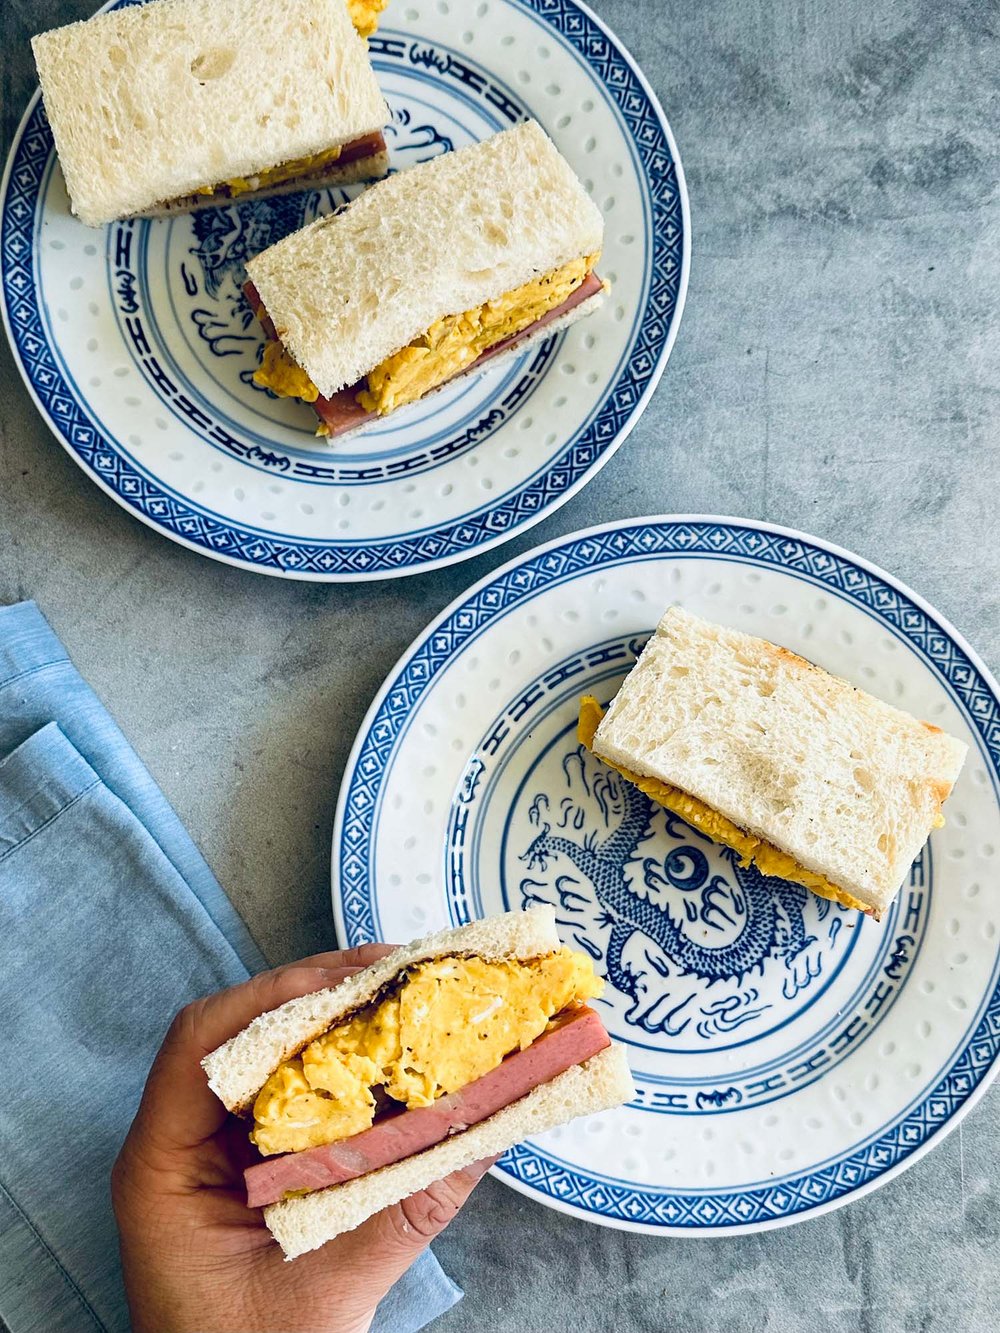 hk morty egg sandwich